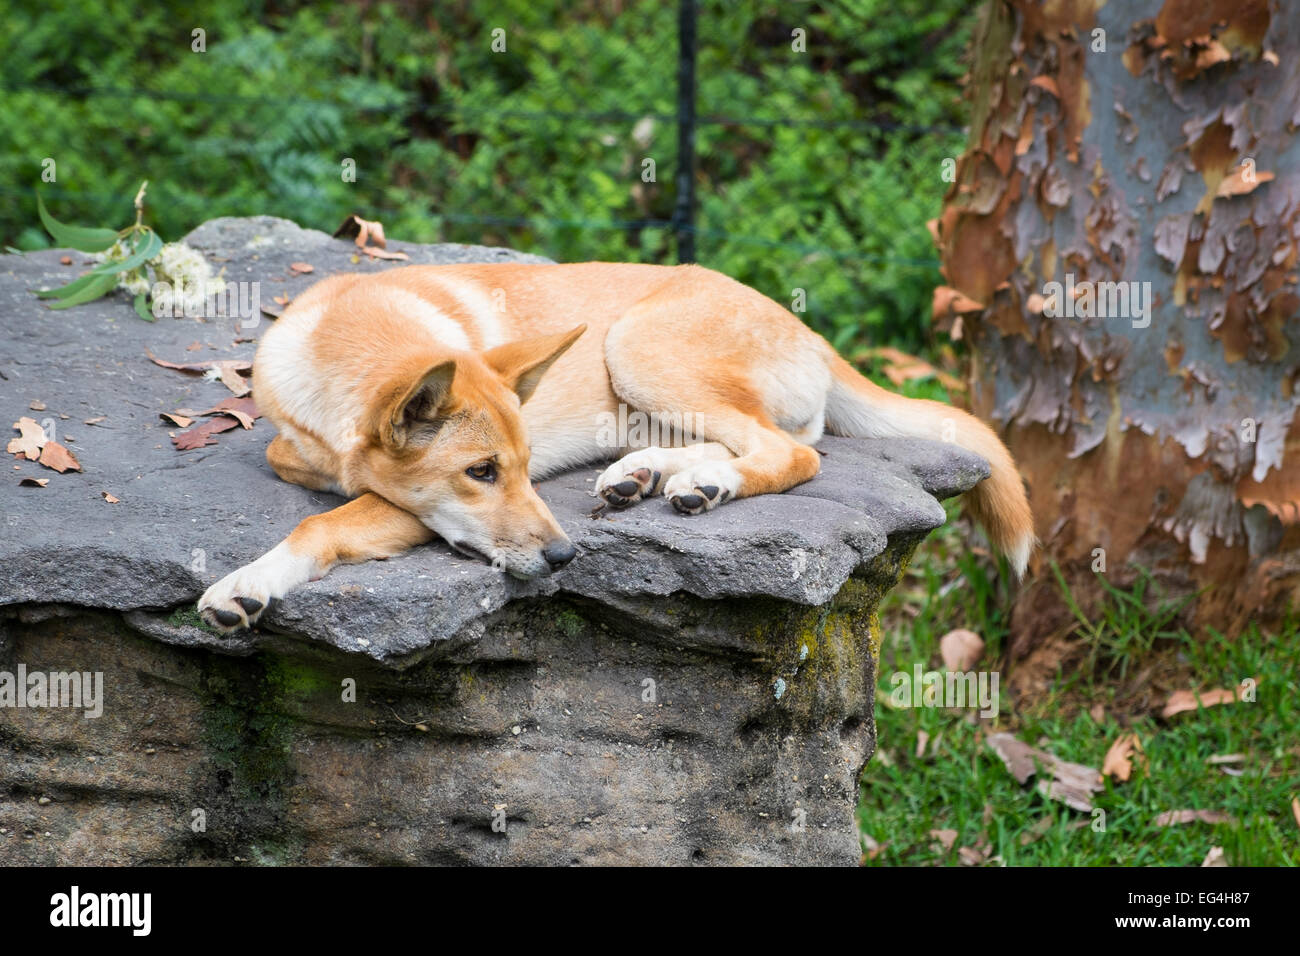 An Australian dingo laying on a rock. Stock Photo